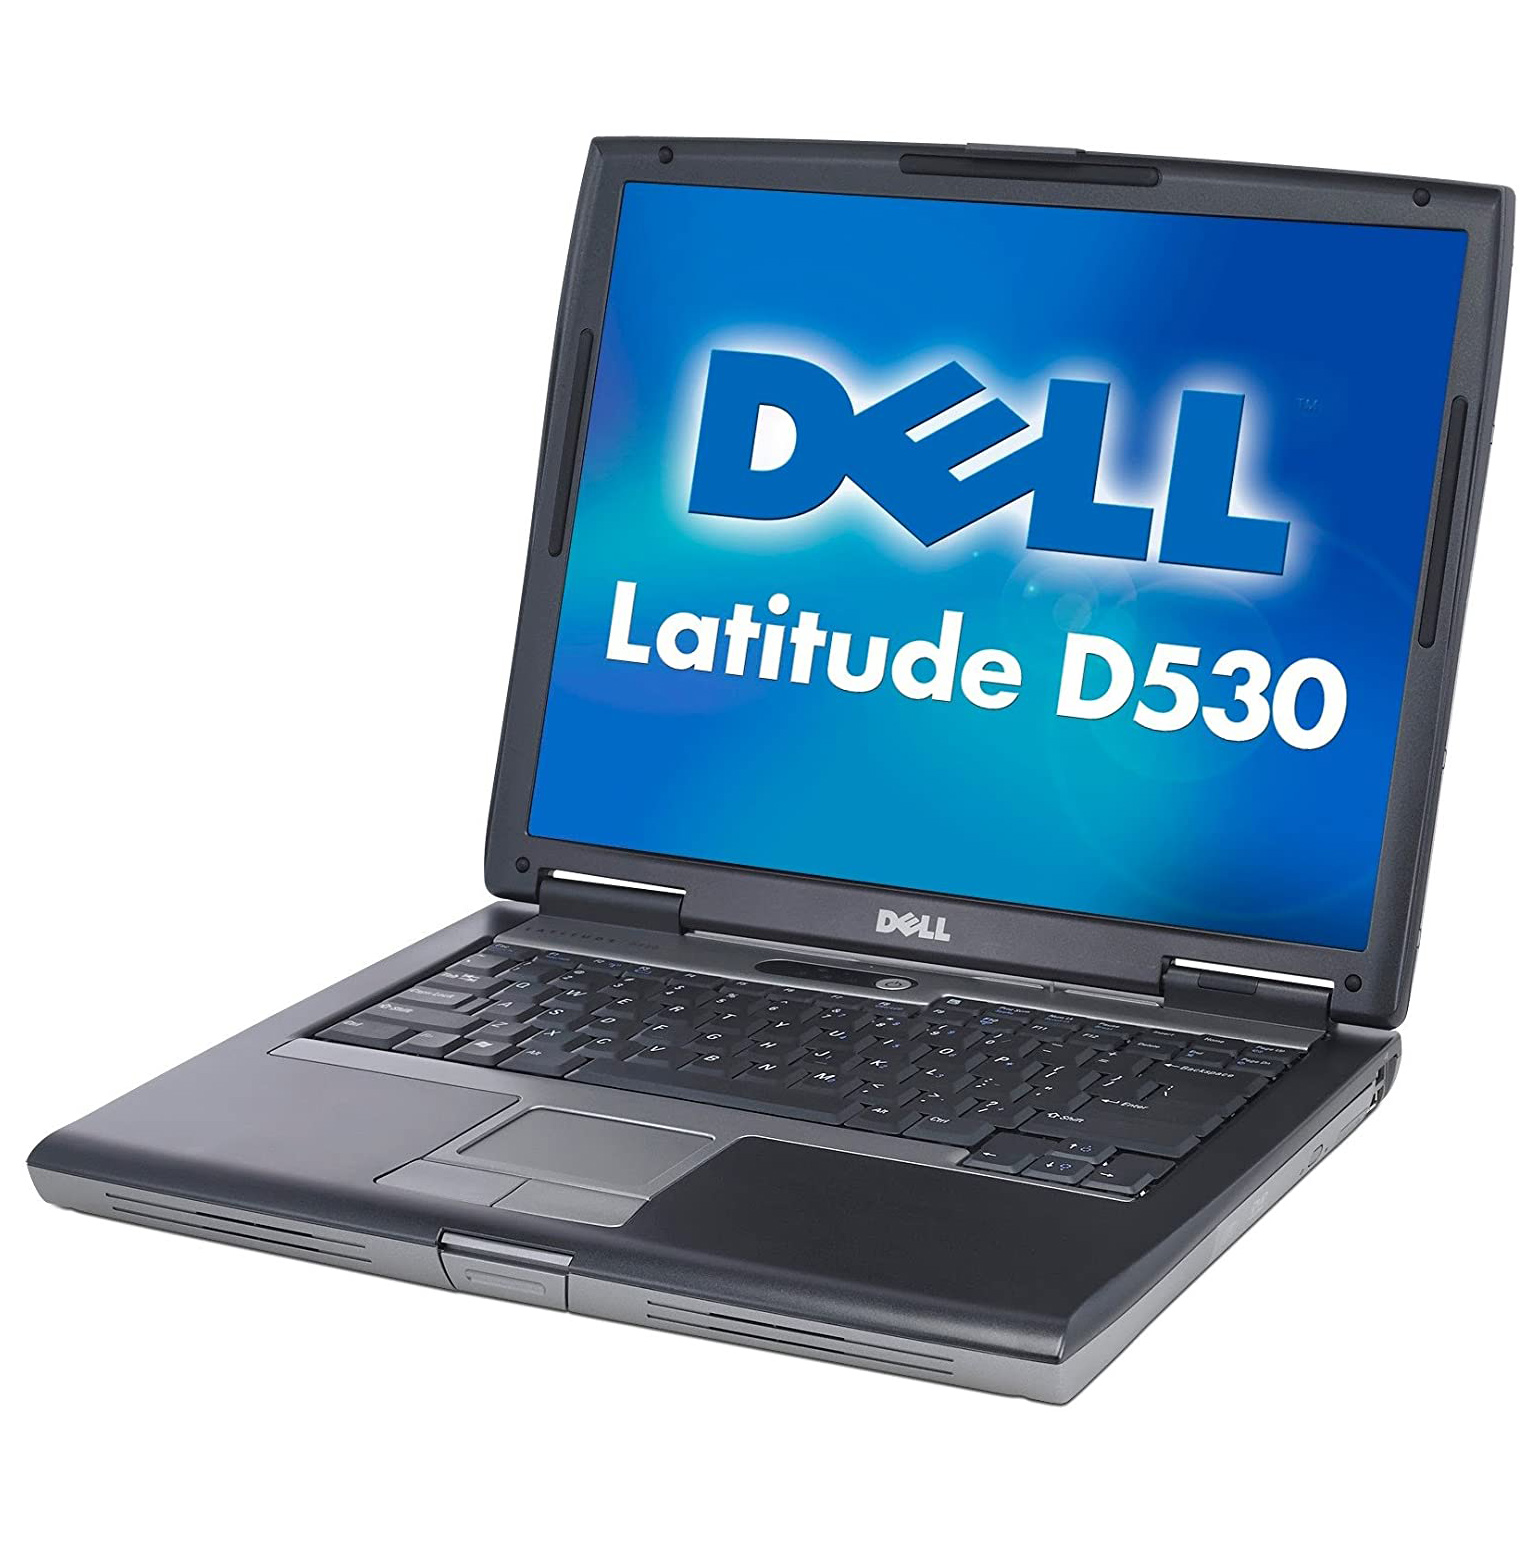 Portátil DELL D530 Intel Celeron 1.8